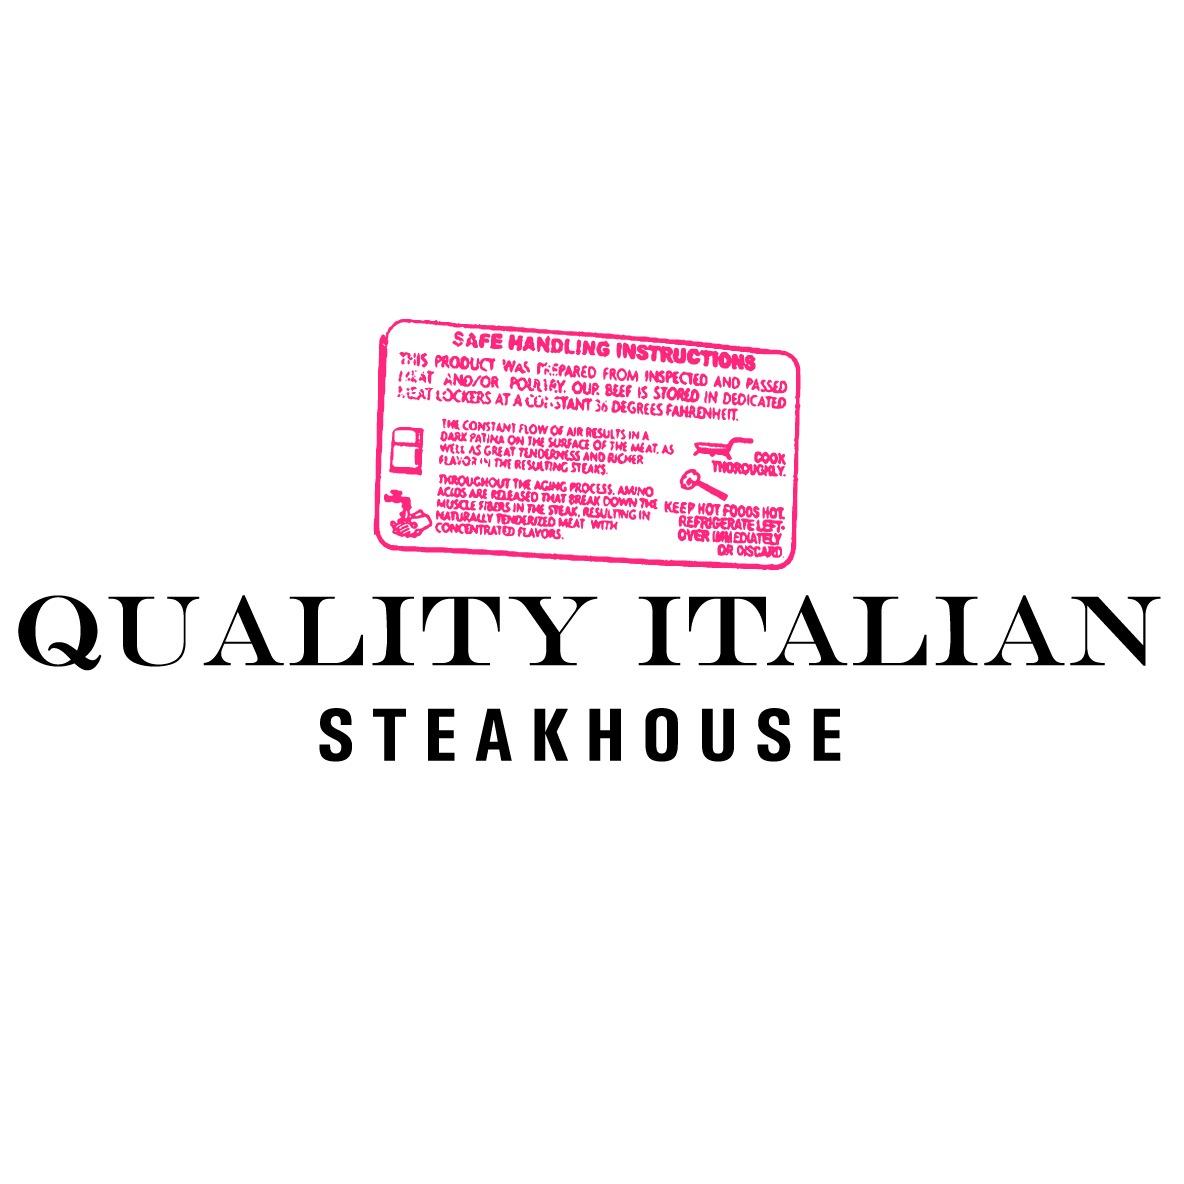 Quality Italian Logo